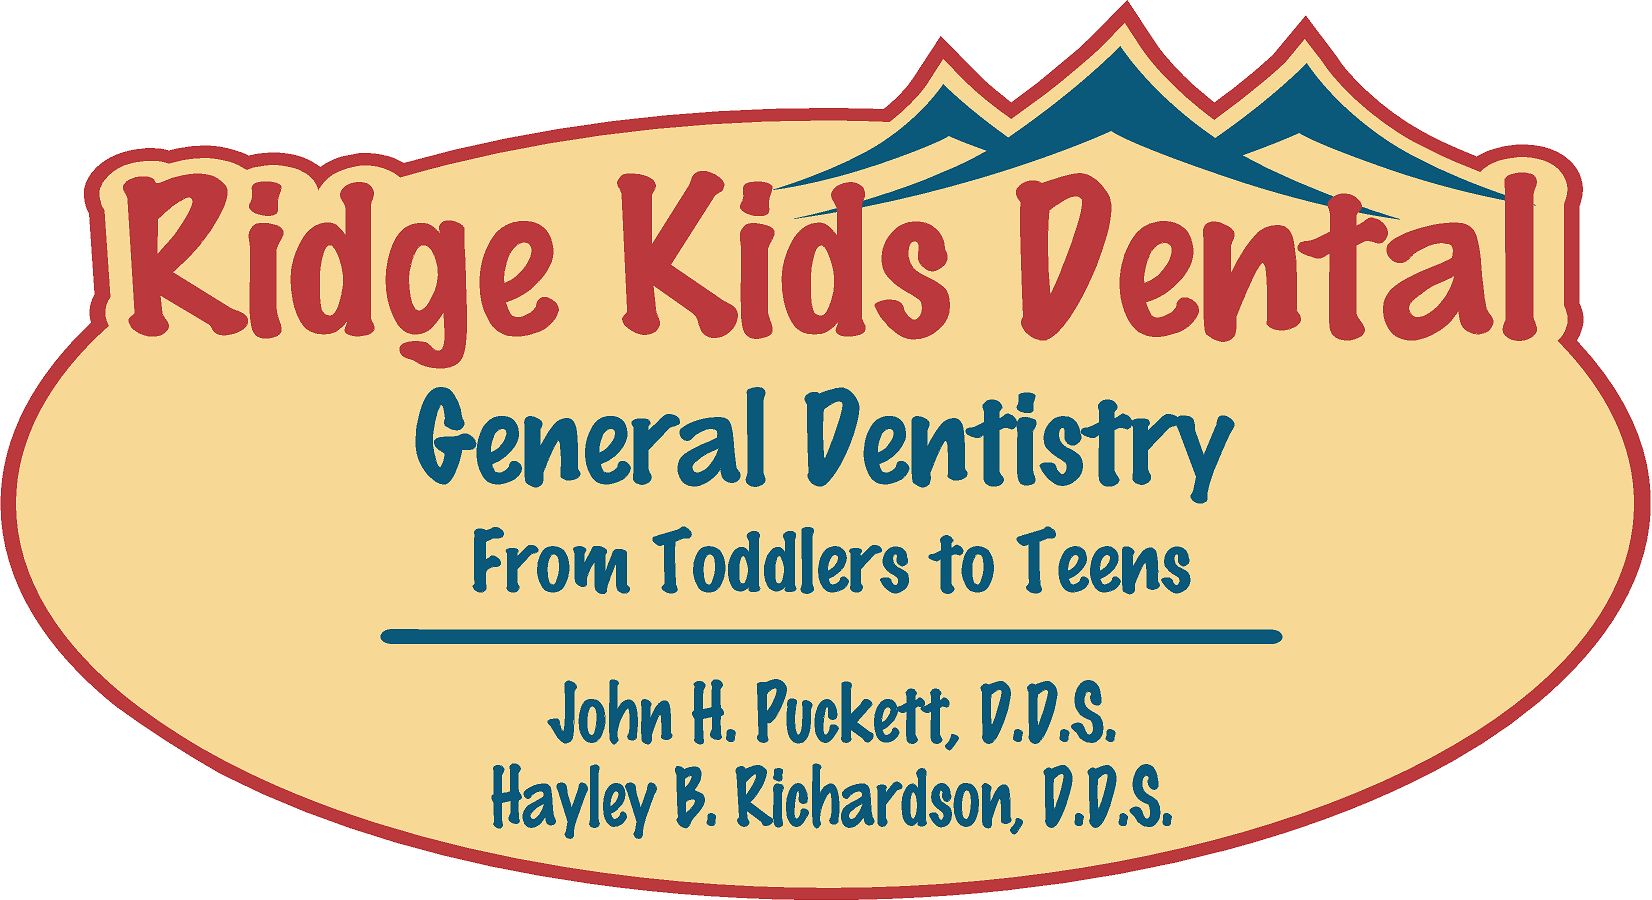 Pediatric Dental Office in Paragould, AR | Ridge Kids Dental